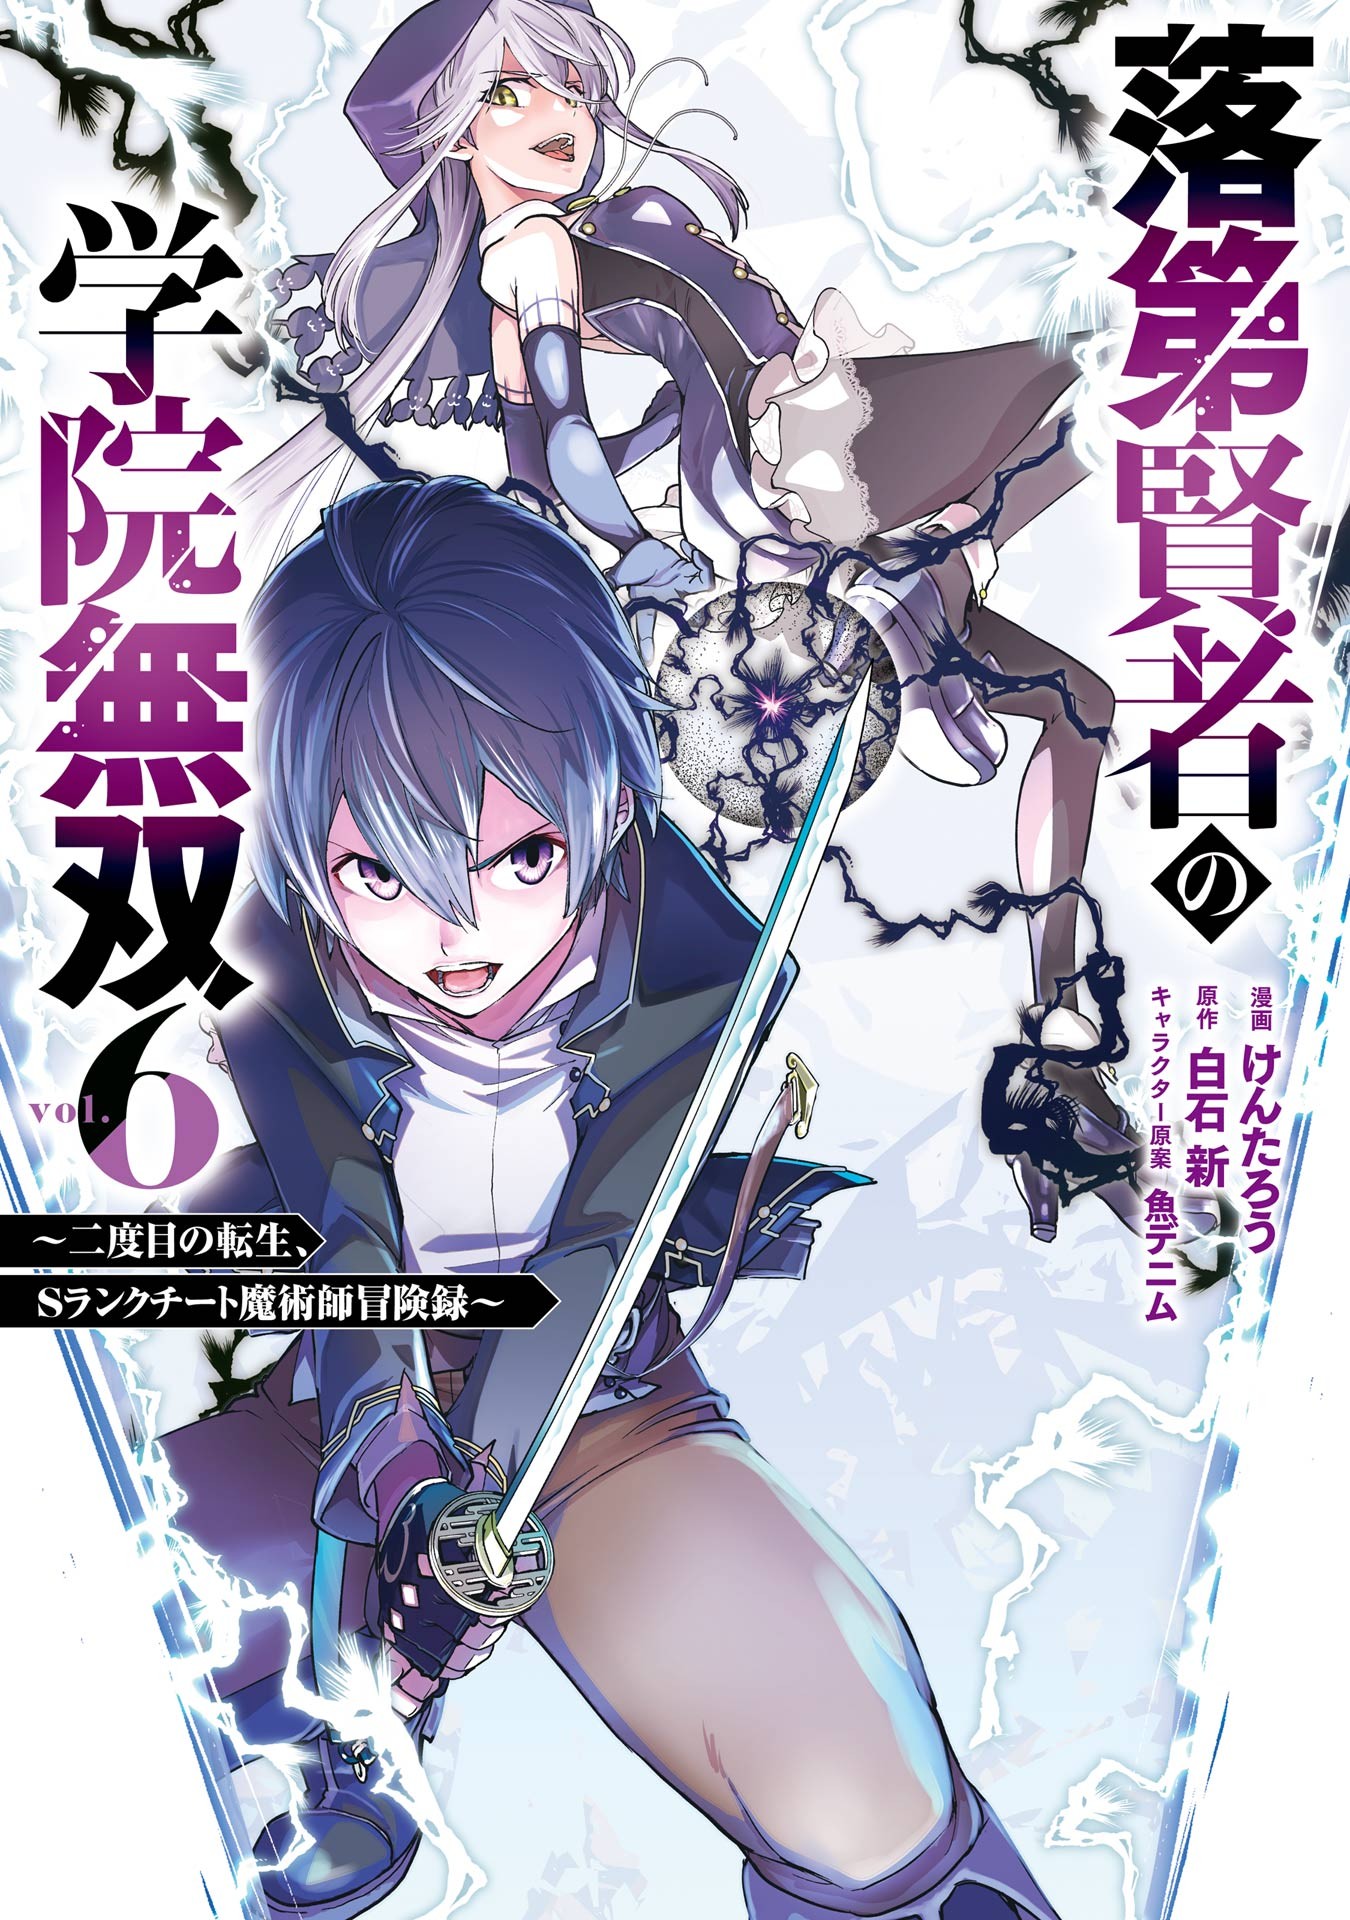 Manga Mogura RE on X: Upcoming Monthly Shounen Ace issue 04/2021 with Isekai  Cheat Magician manga adaption by Uchida Takeru, Suzuragi Karin, Nardack on  the cover  / X